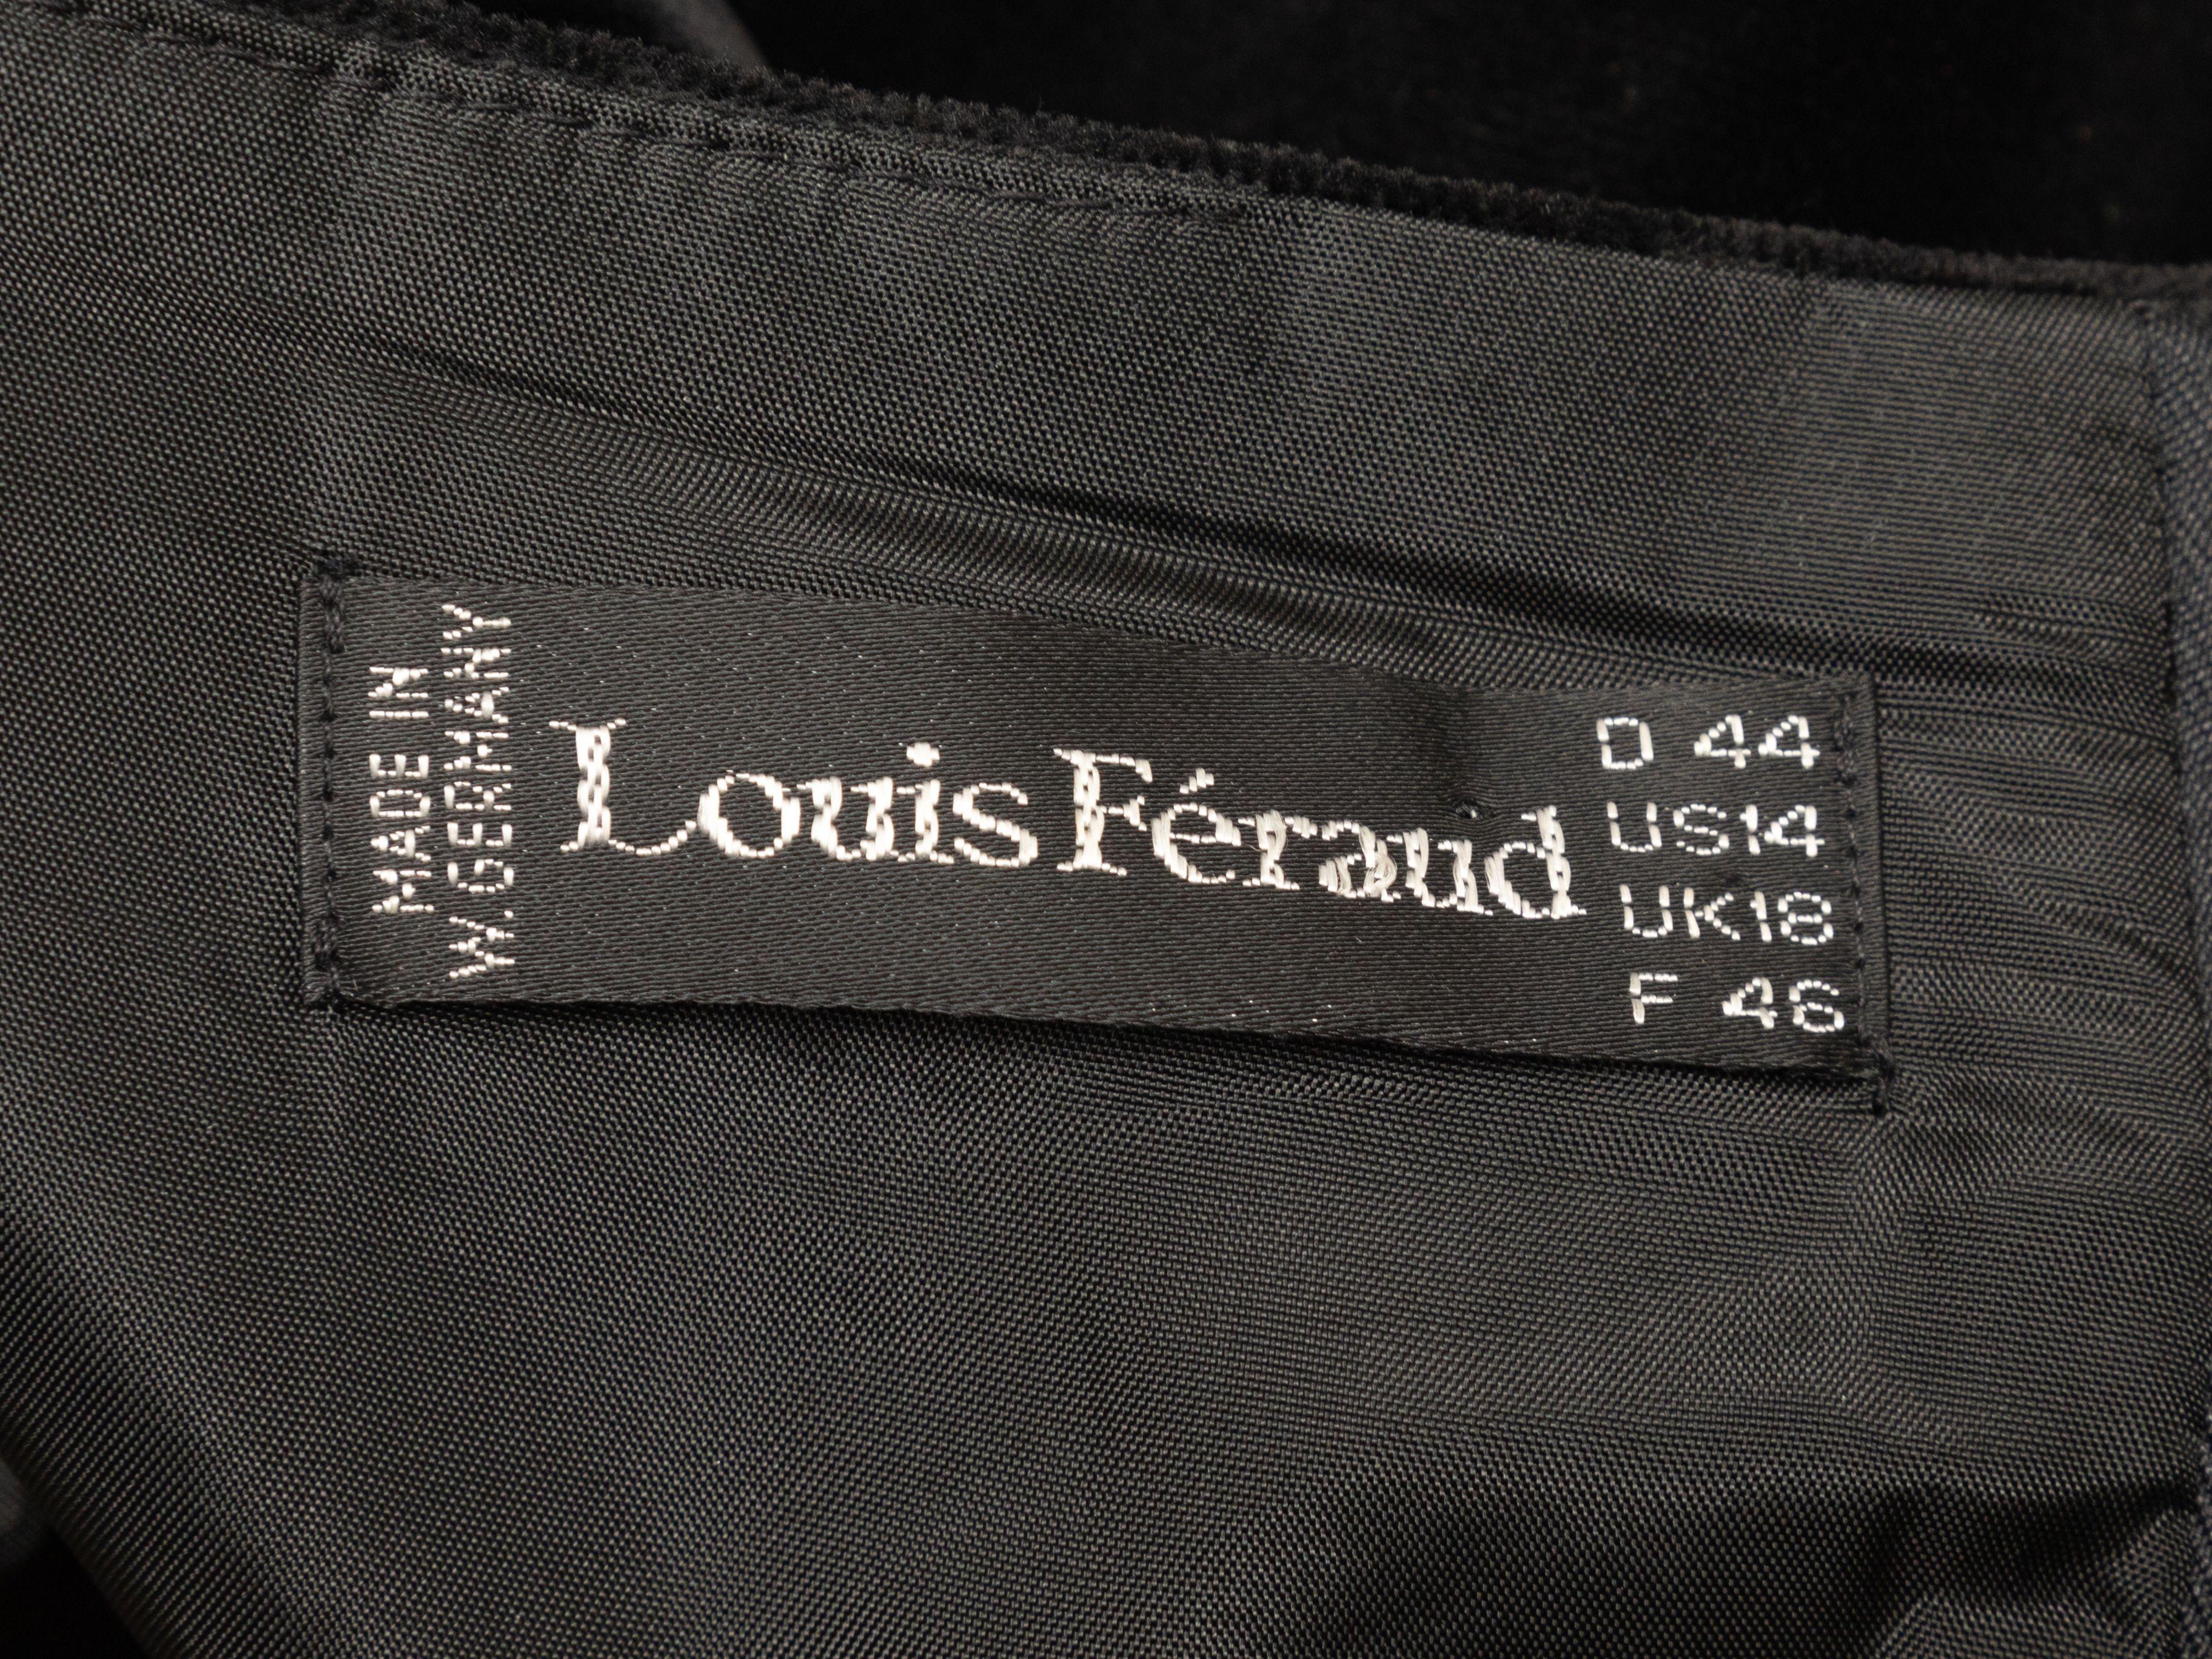 Product Details: Vintage black velvet long sleeve cocktail dress by Louis Feraud. Square neckline. Rosette accents at hem. Zip closure at back. 34